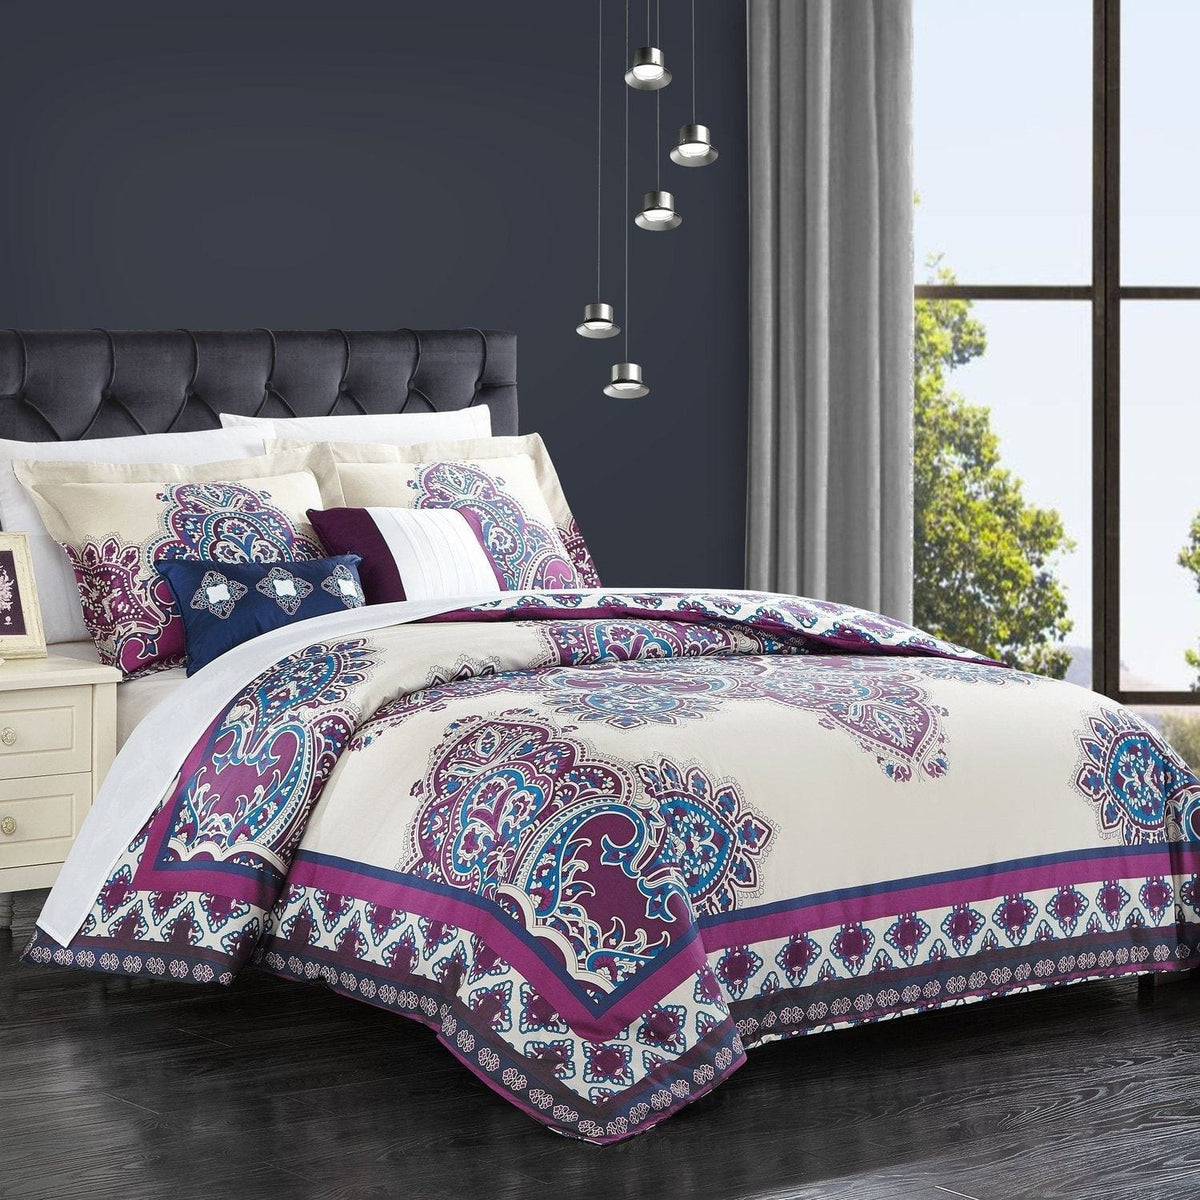 Chic Home Mazal 5 Piece Cotton Comforter Set Queen